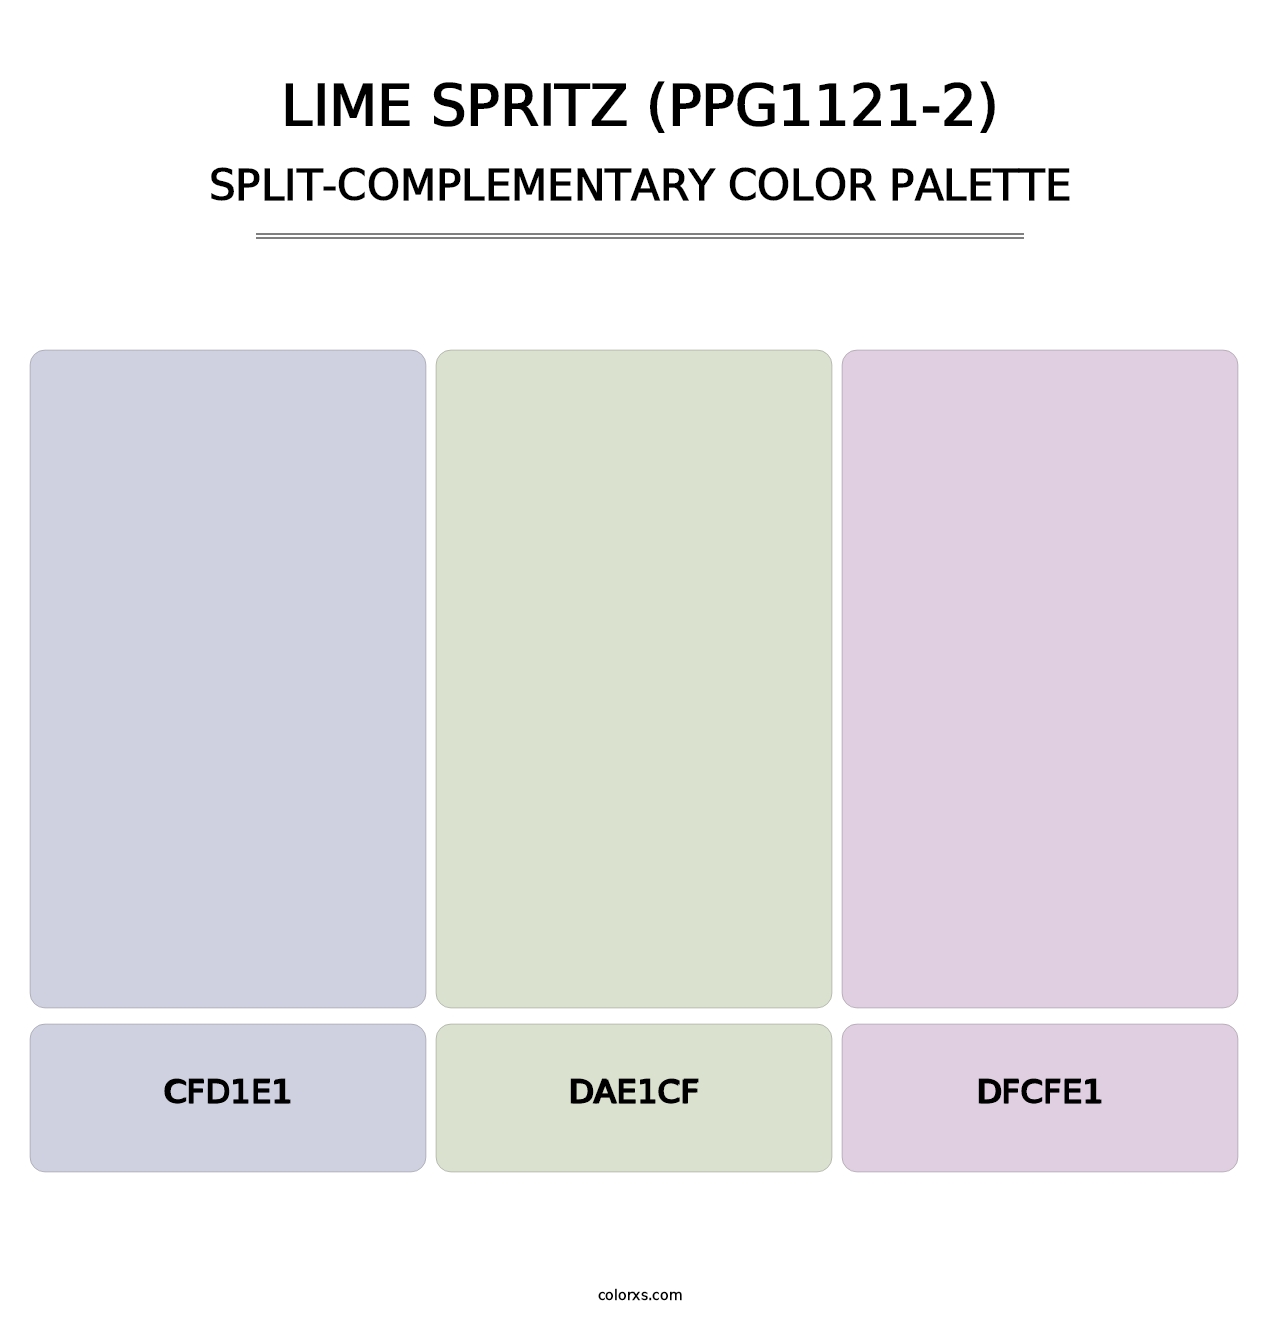 Lime Spritz (PPG1121-2) - Split-Complementary Color Palette